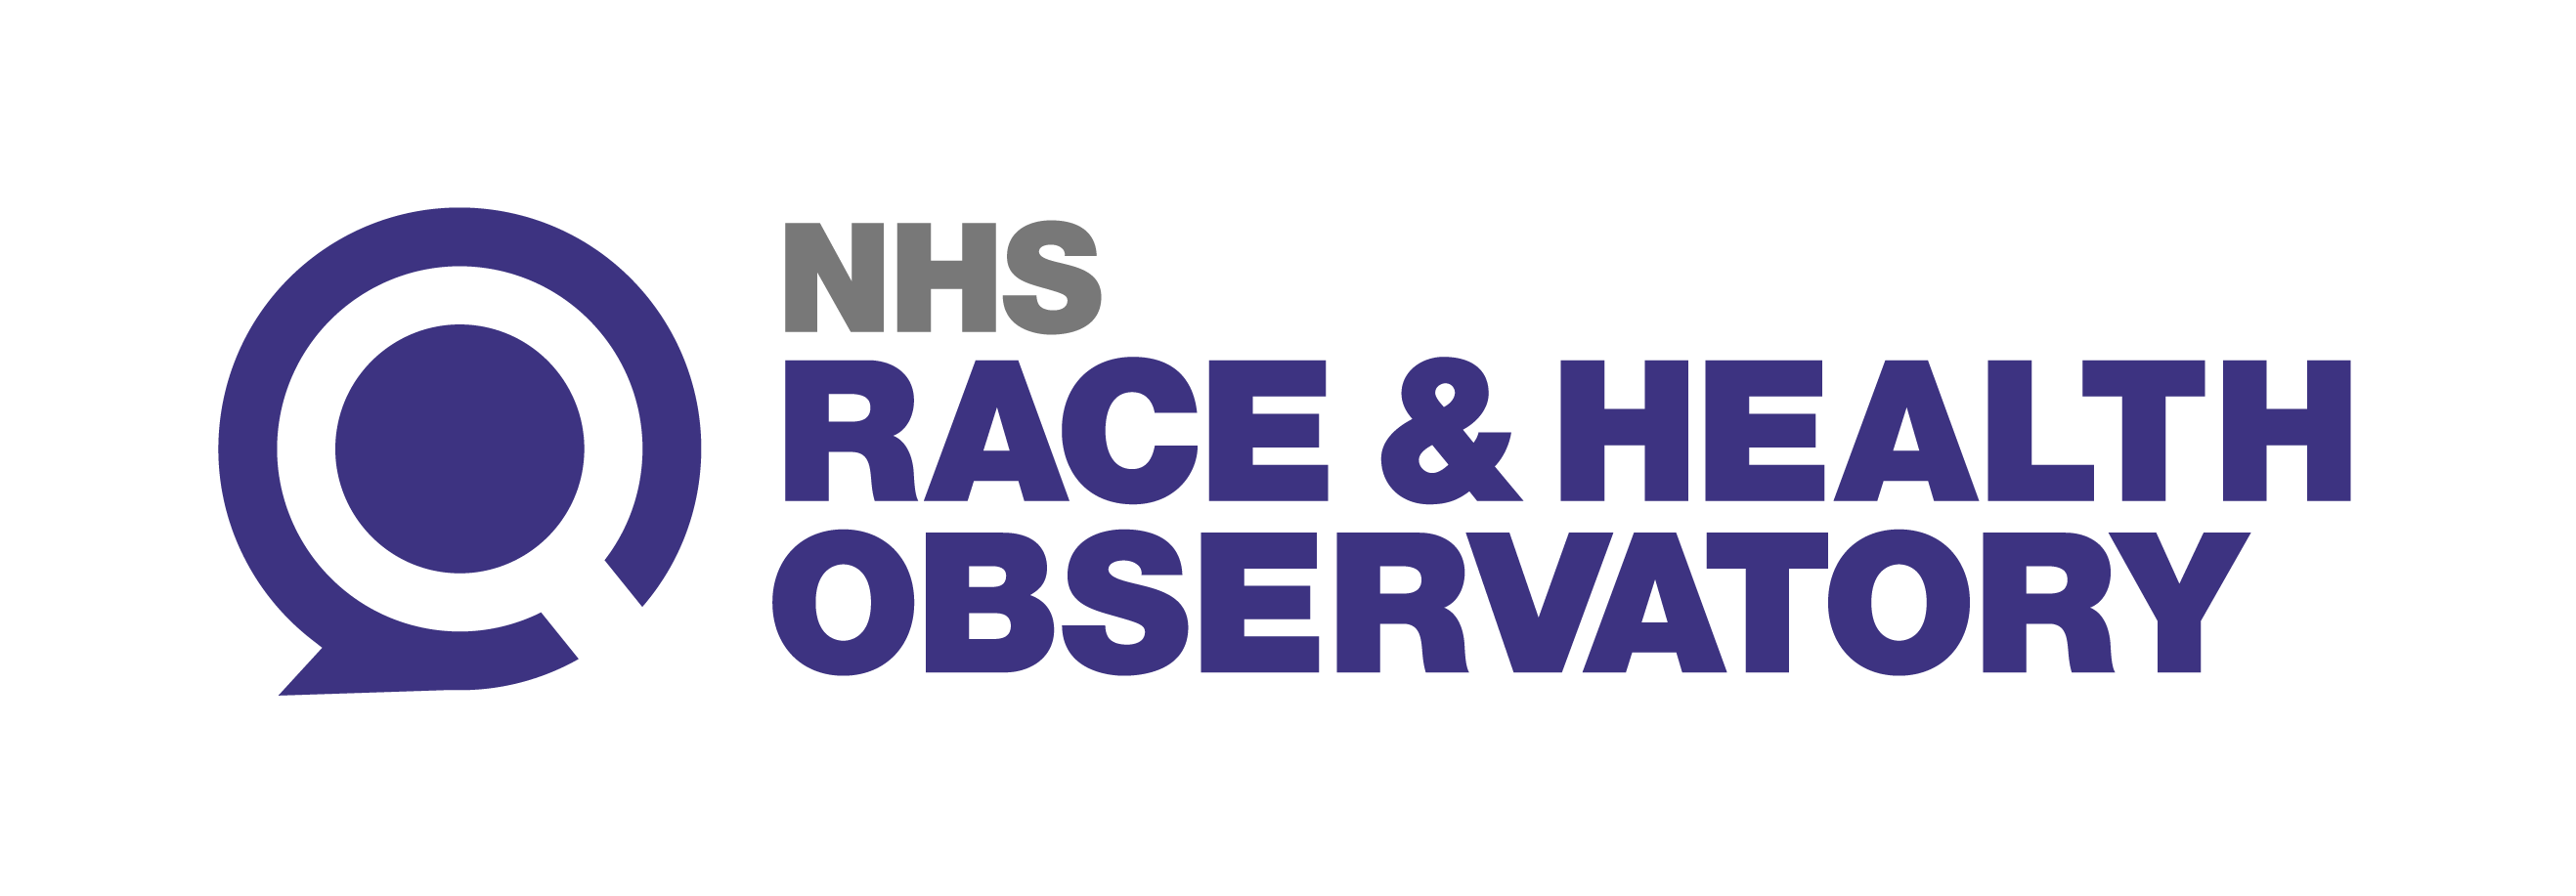 NHS Race & Health Observatory 